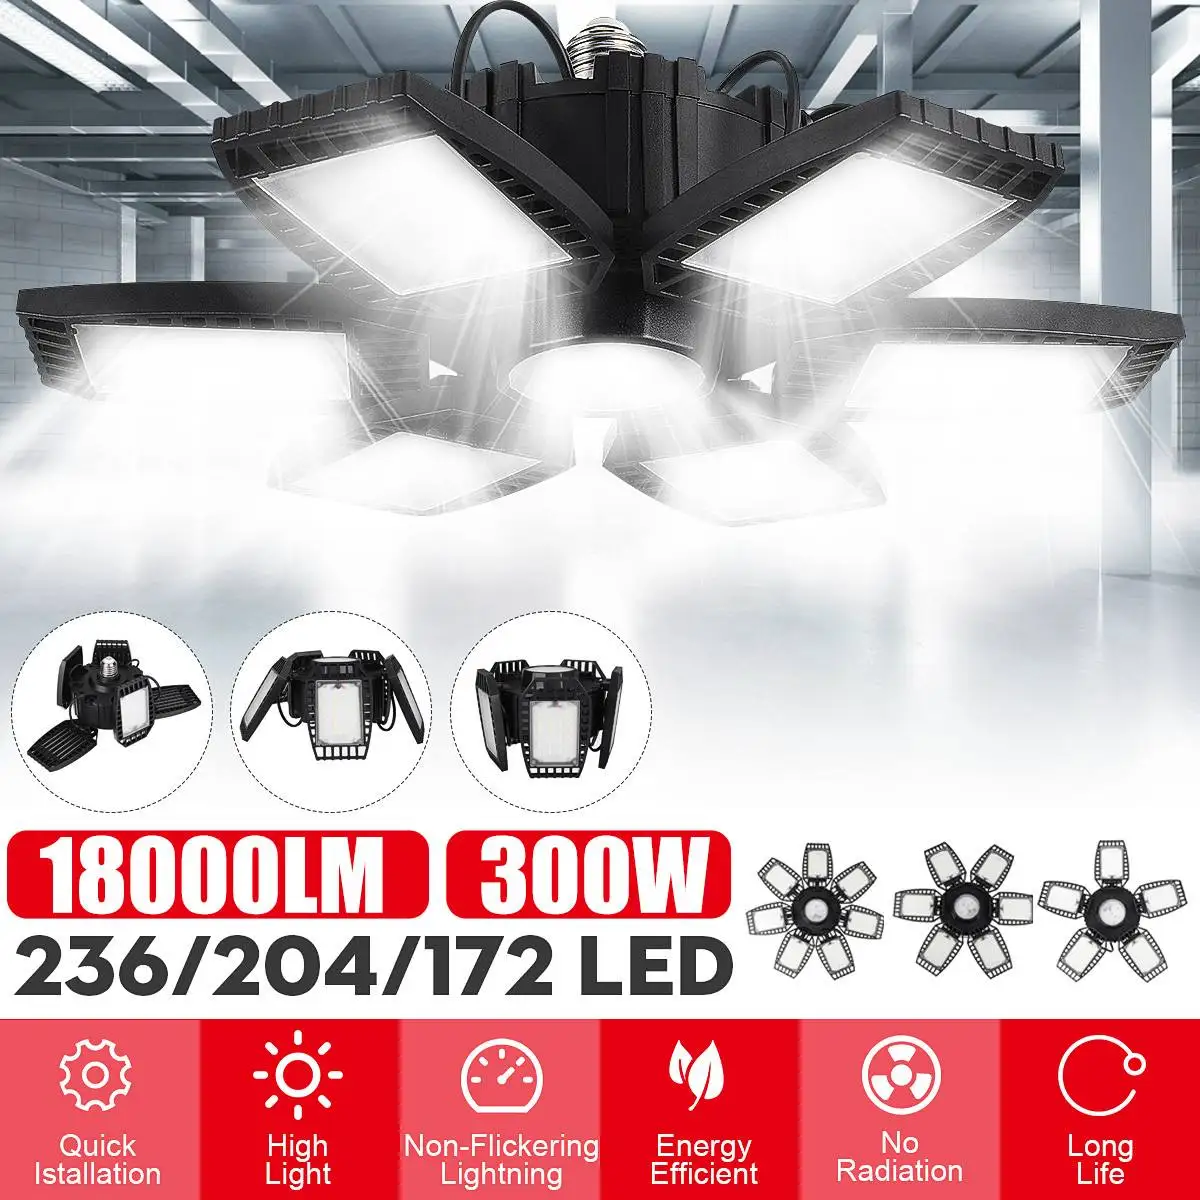 

300W 18000LM Deformable Industrial Lighting E27 Led Fan Garage Light Super Bright 2835 Led High Bay Industrial Lamp for Workshop